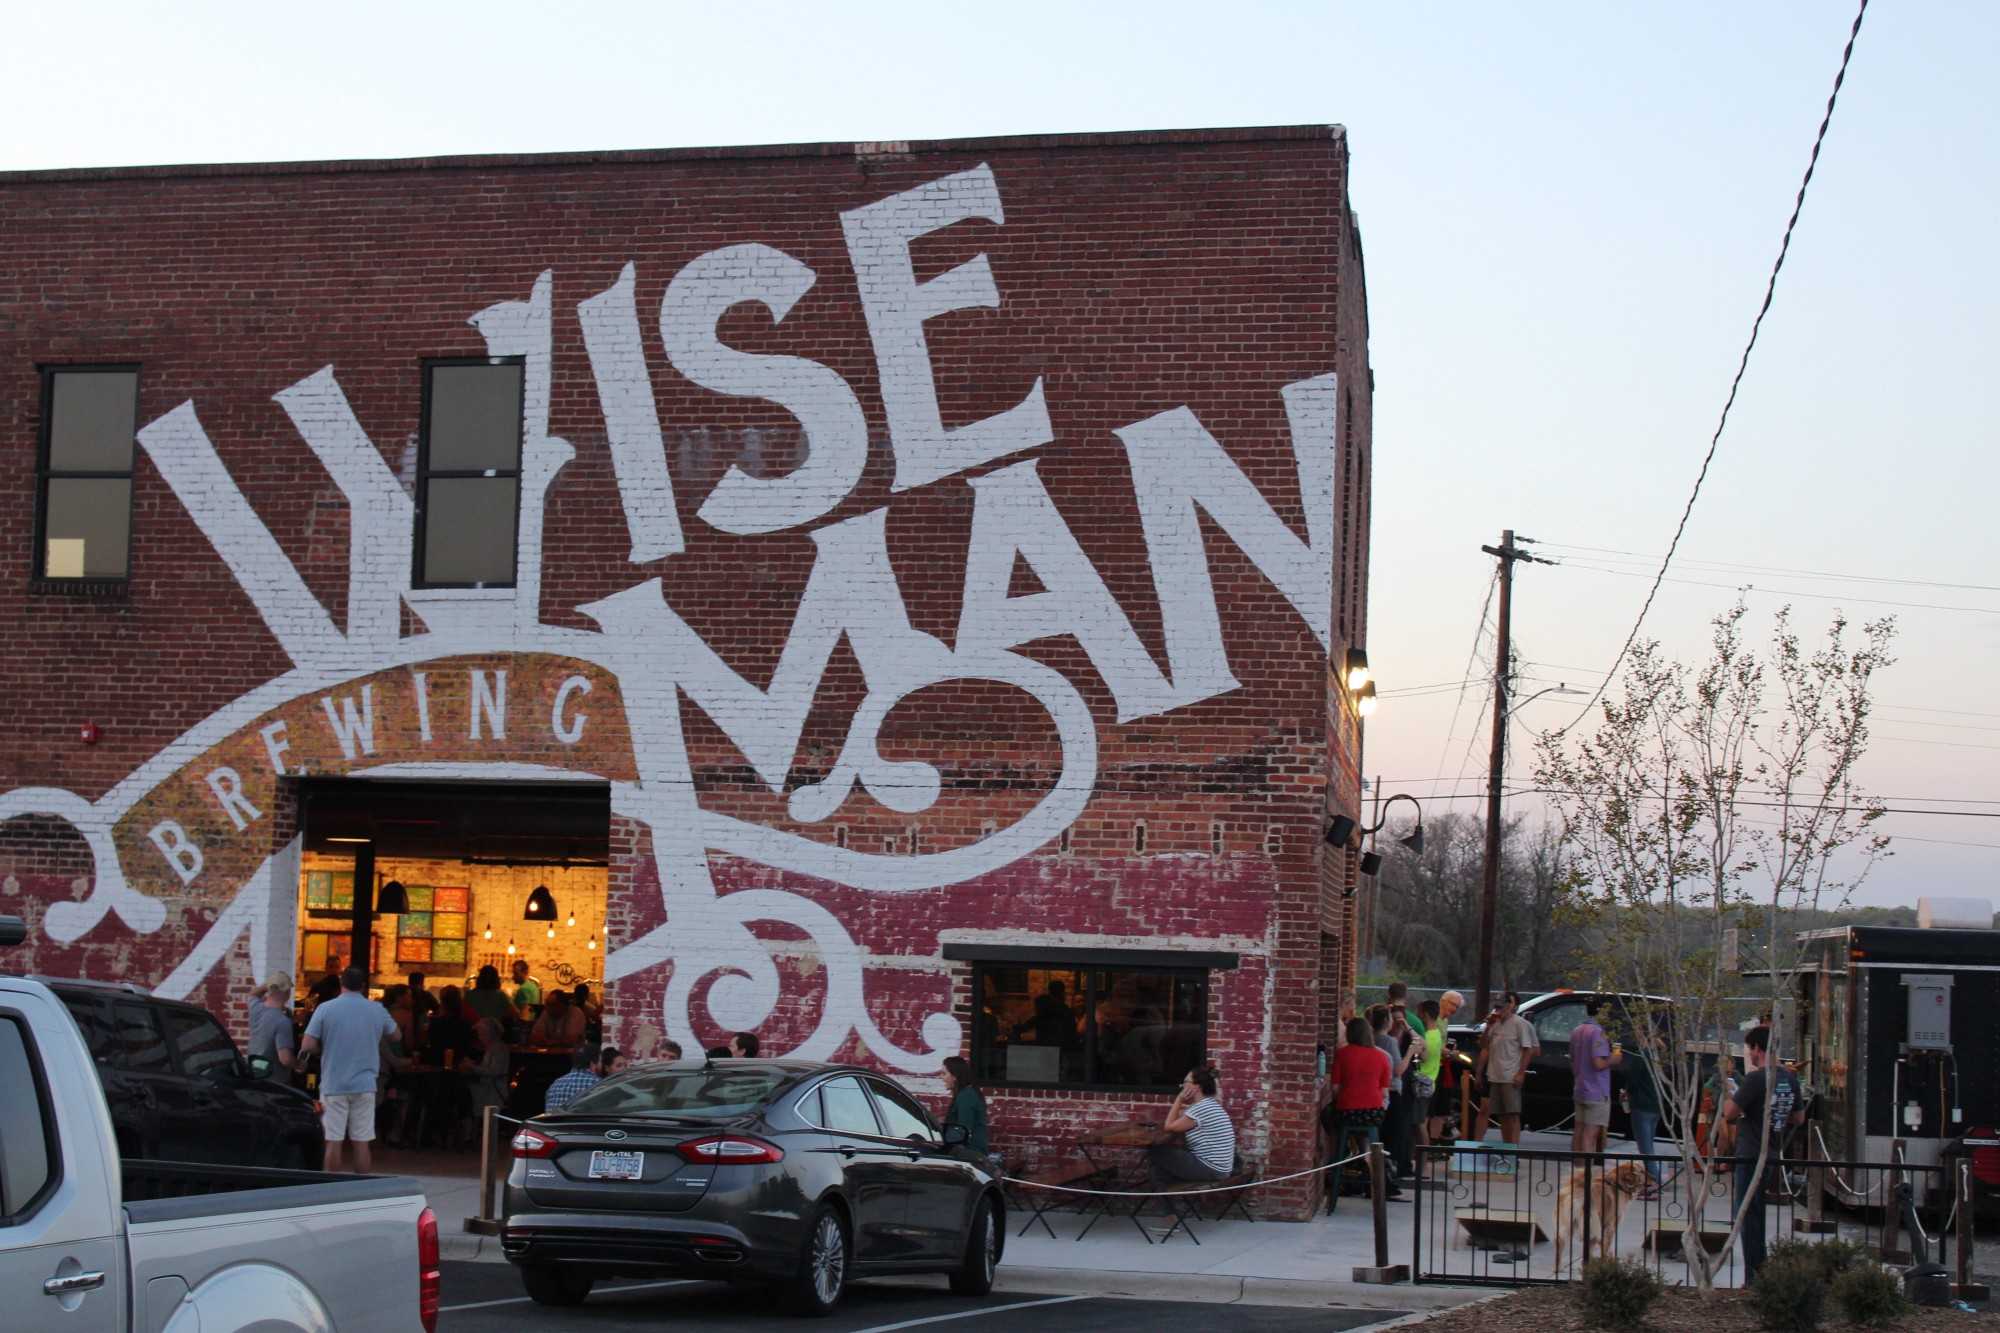 Wise Man brews change in downtown WS